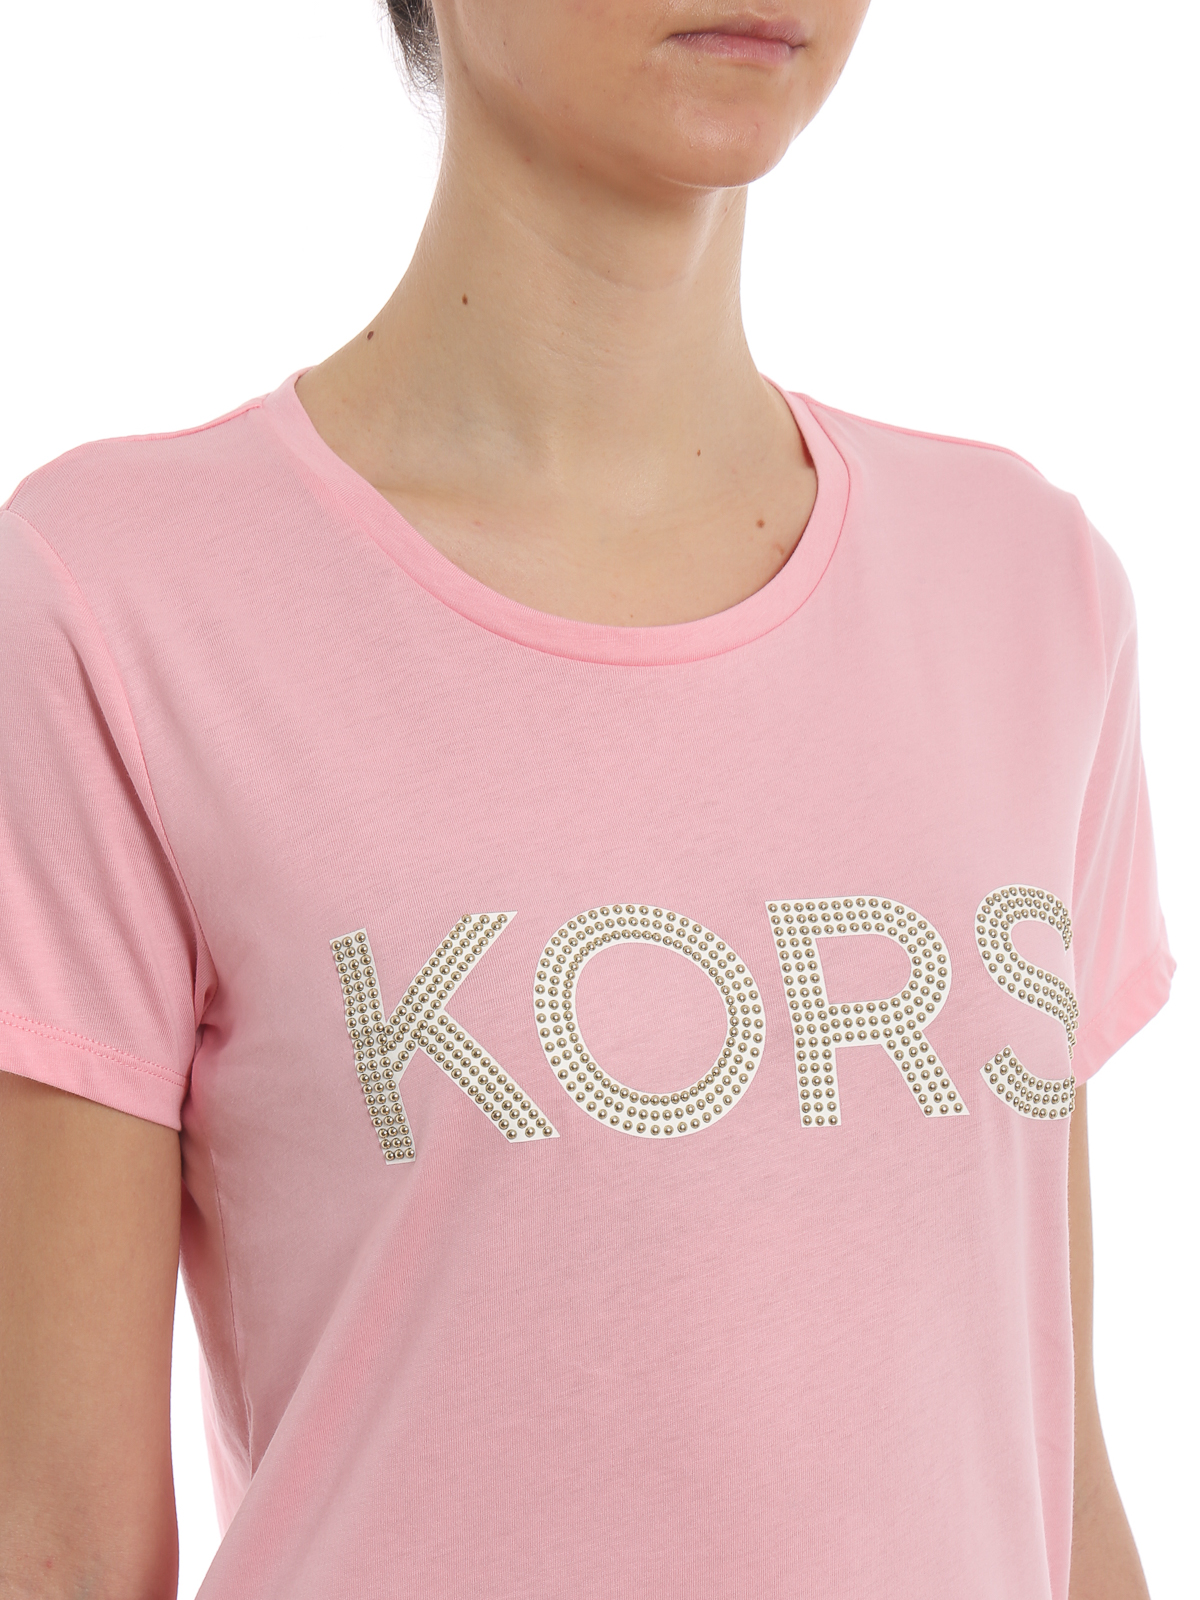 michael kors shirts womens online